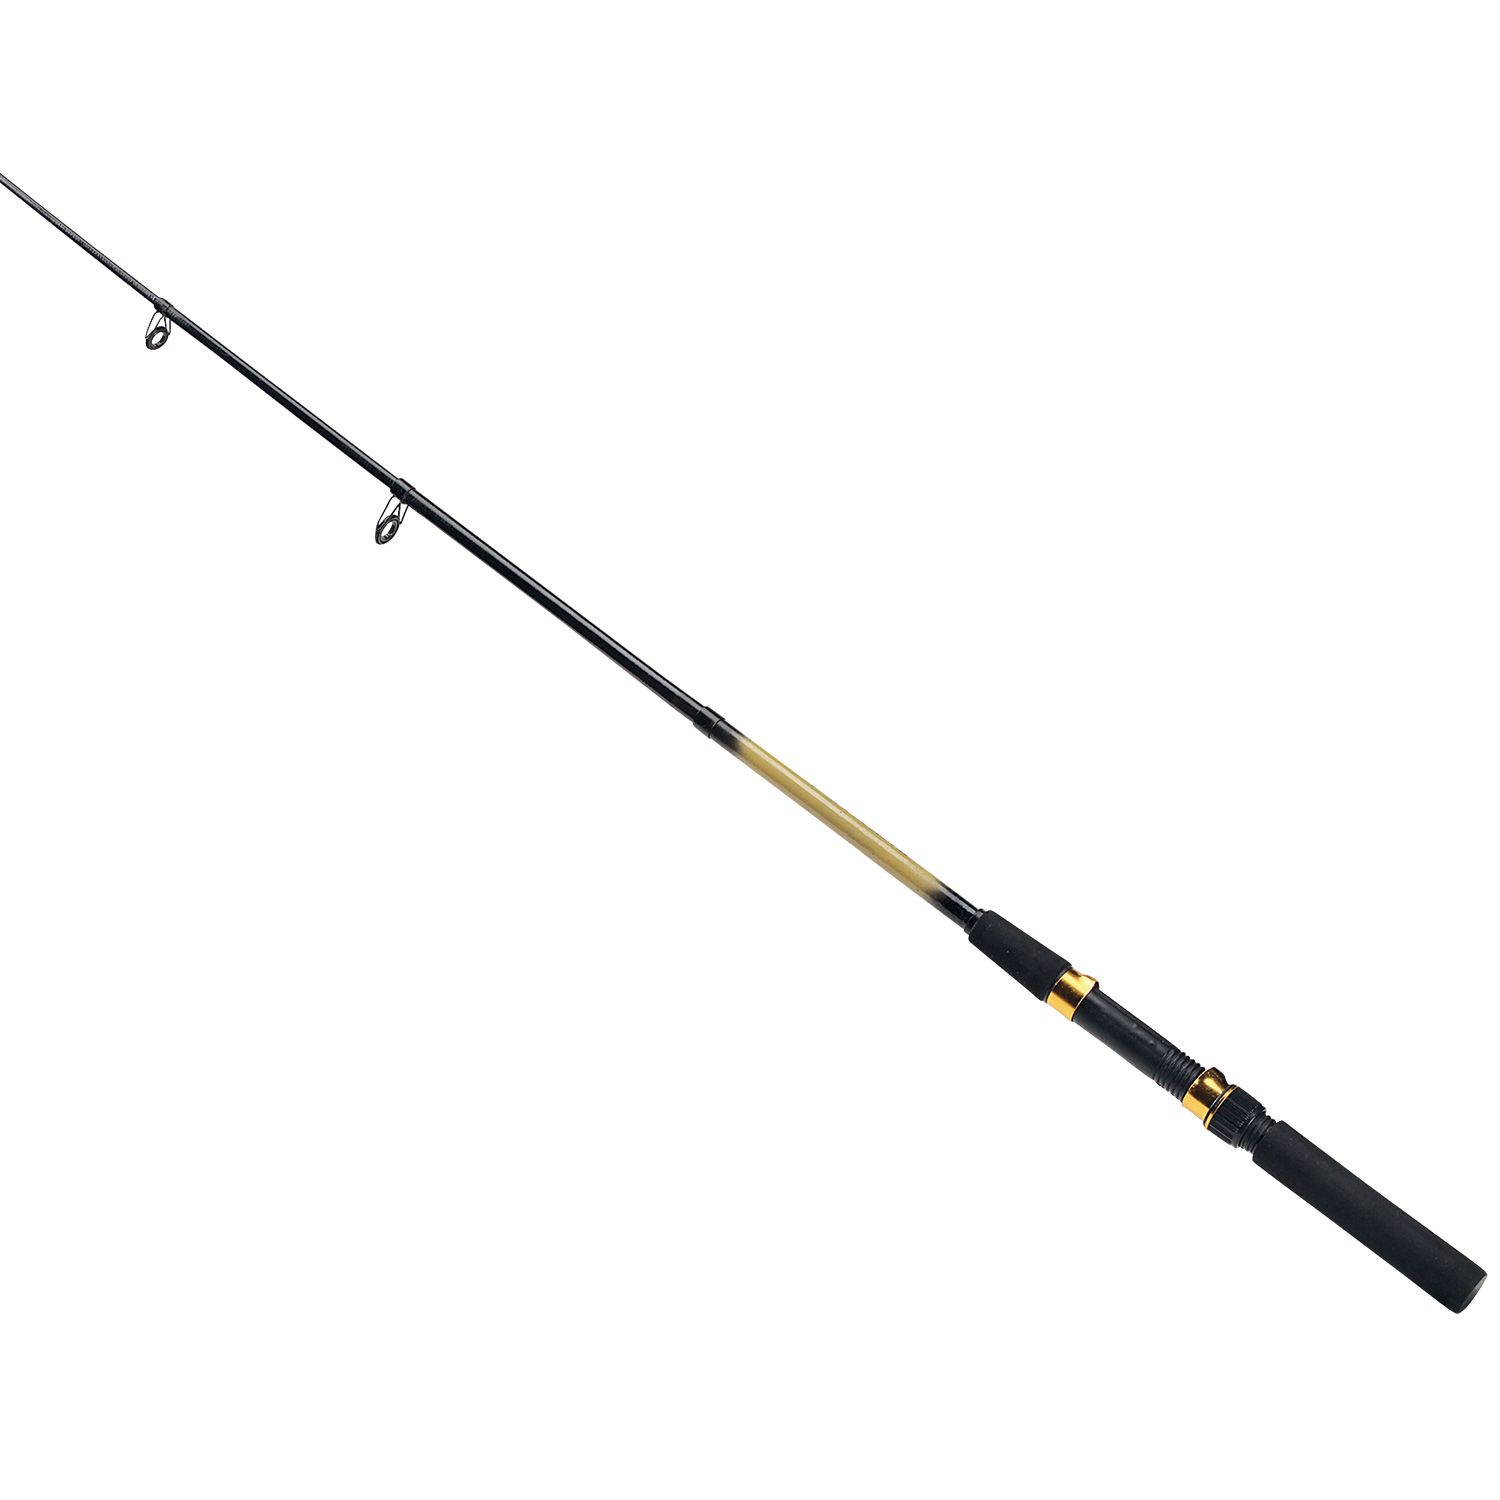 Fishing pole clipart fishing rod image 6 - Clipartix